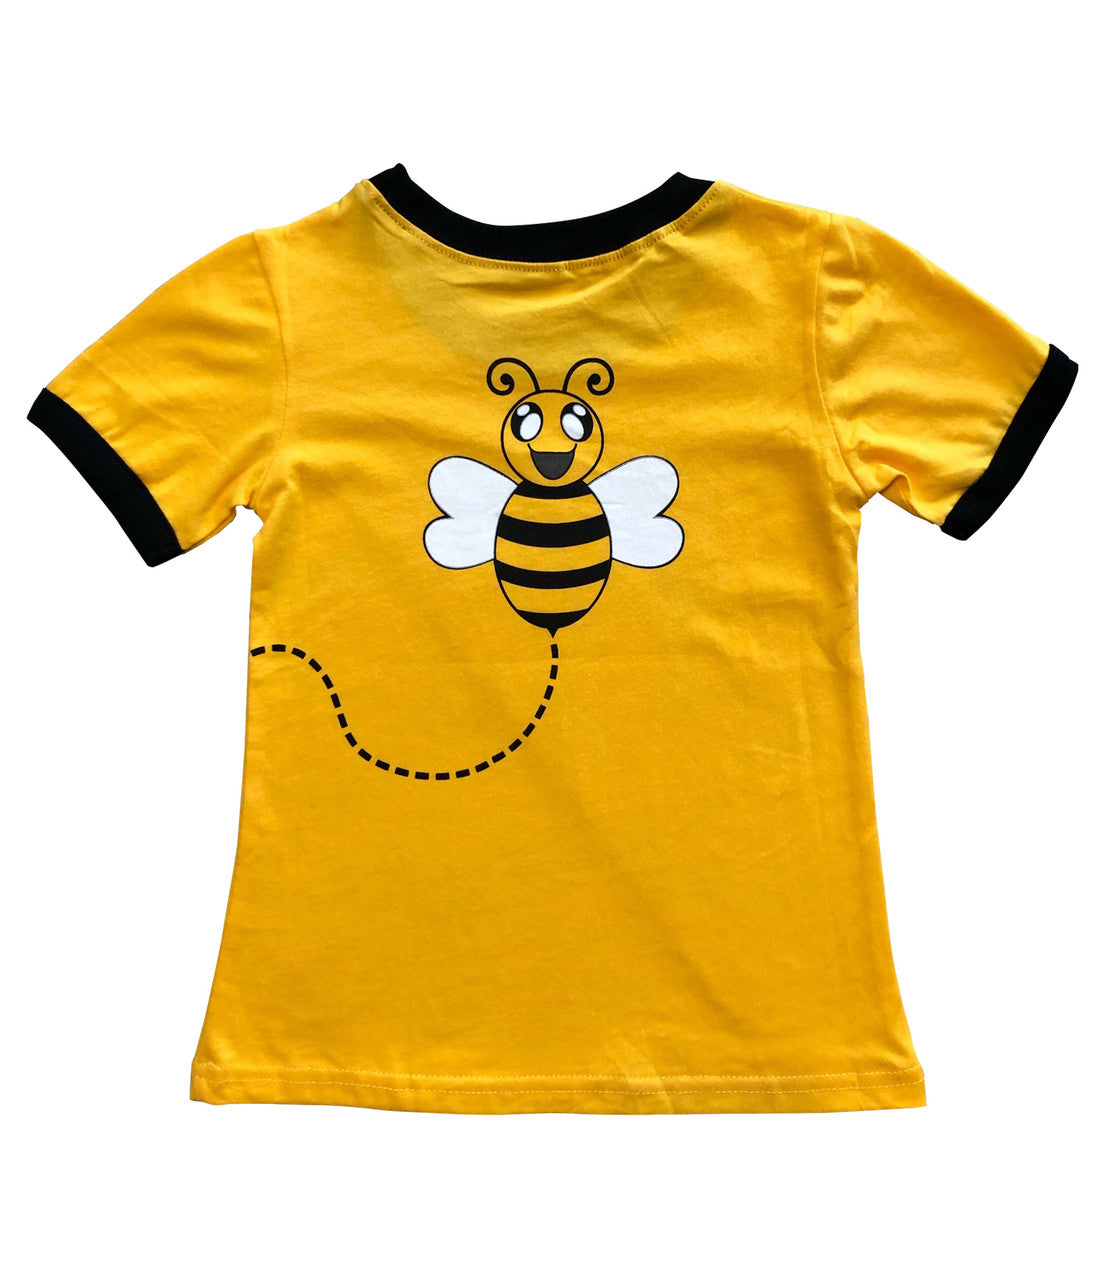 Buzz the Bee T-Shirt